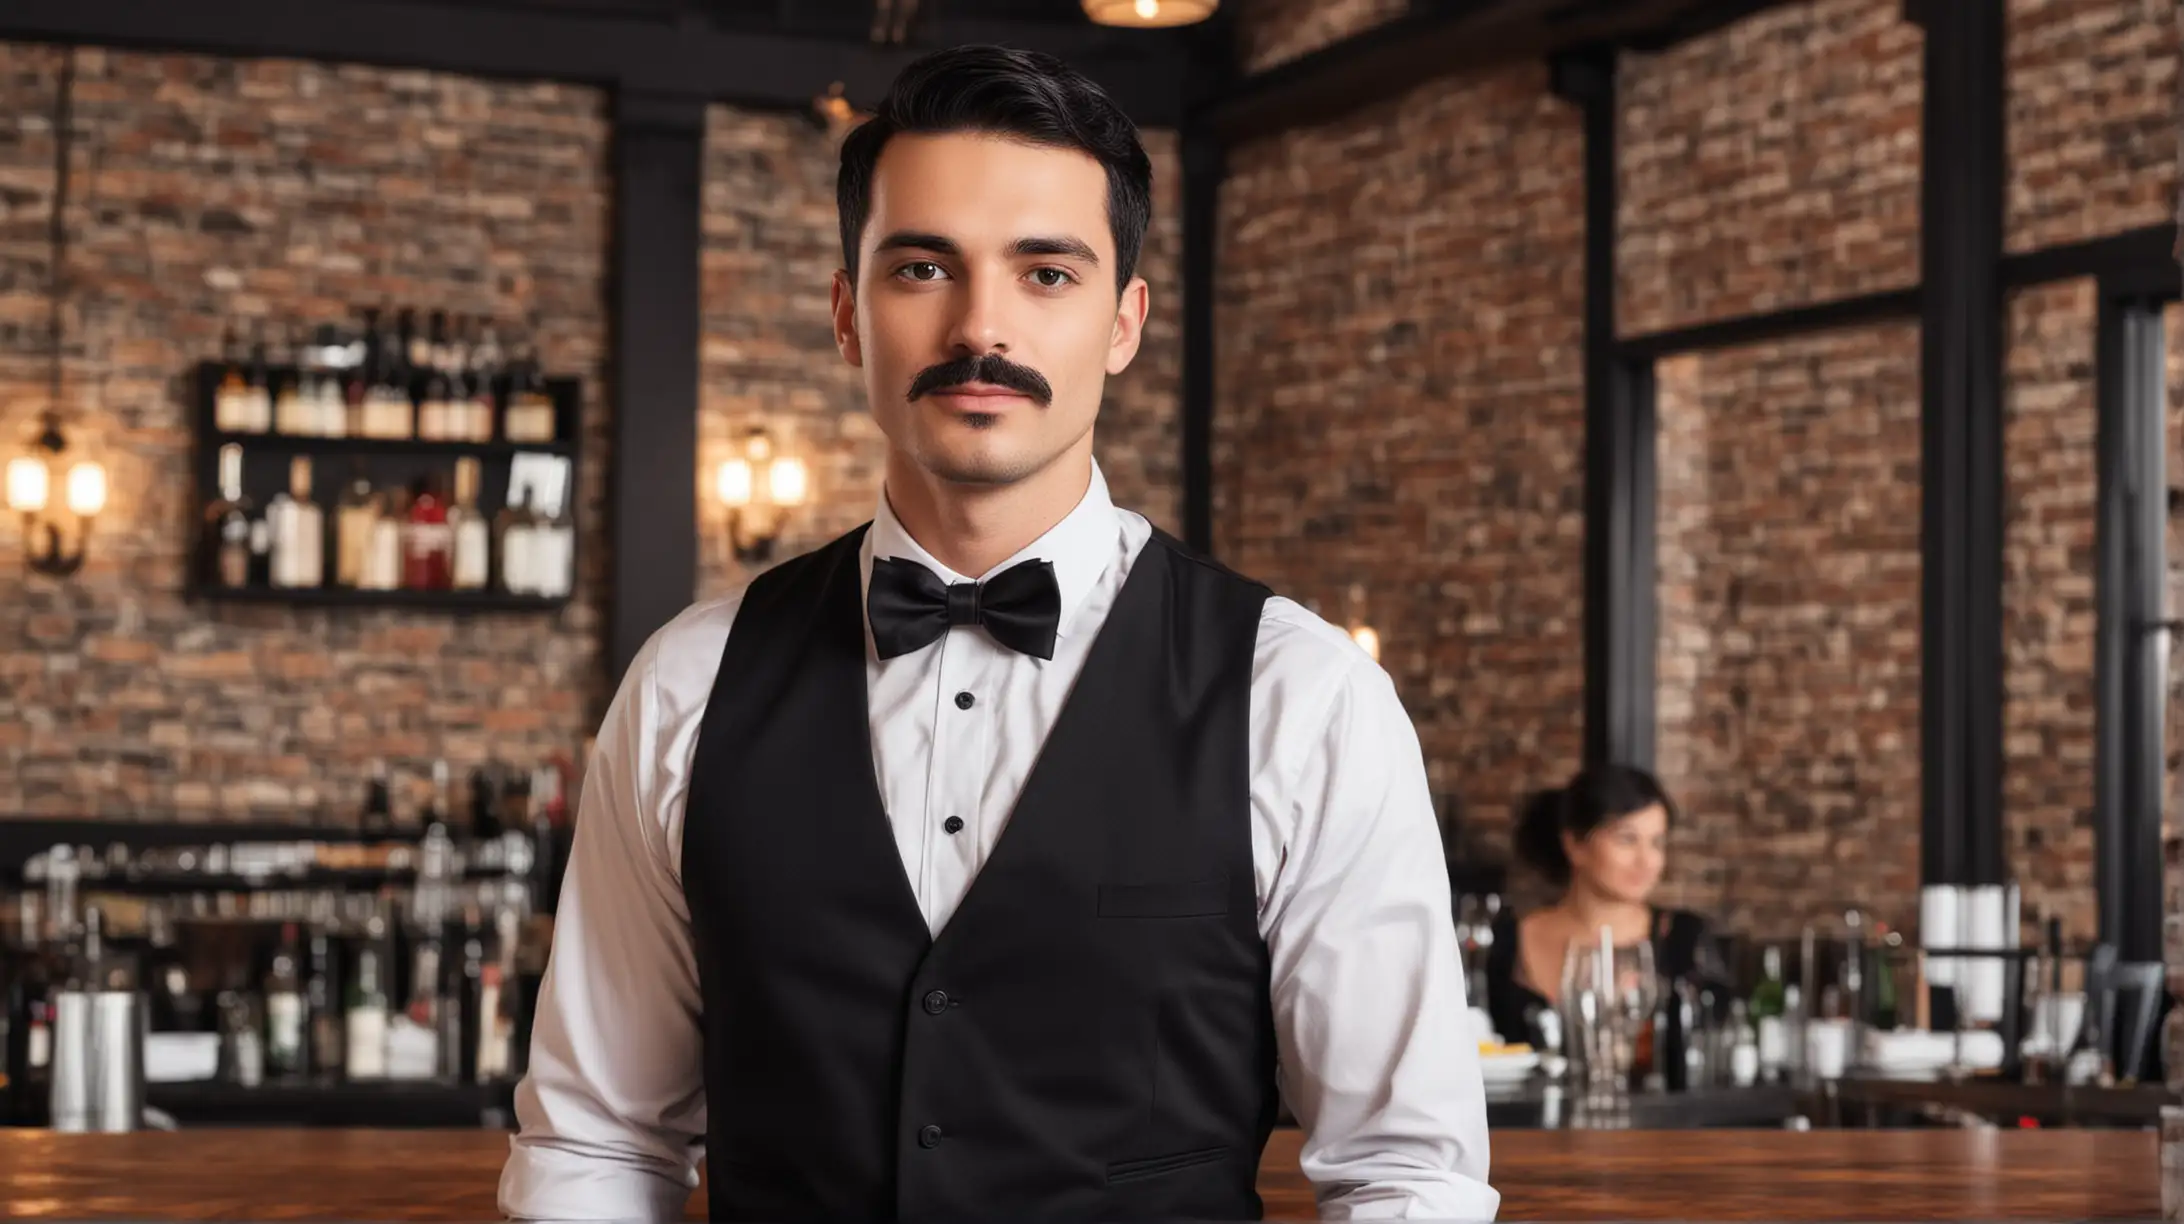 Elegant Male Waiter Serving in Classic Steakhouse Setting